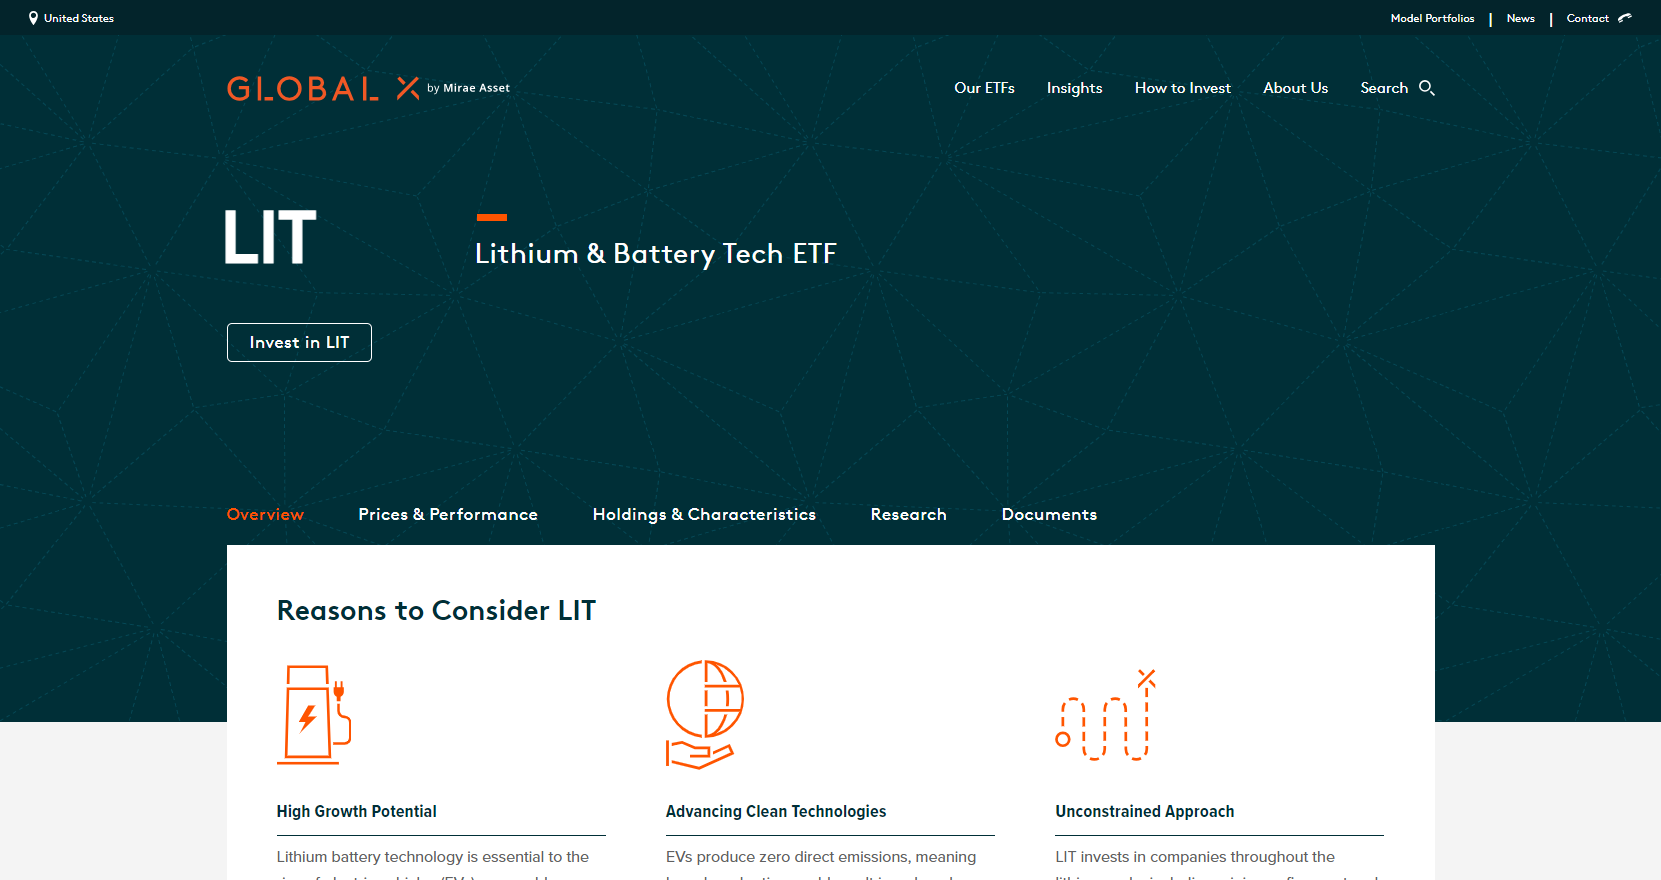 Global X Lithium & Battery Tech ETF